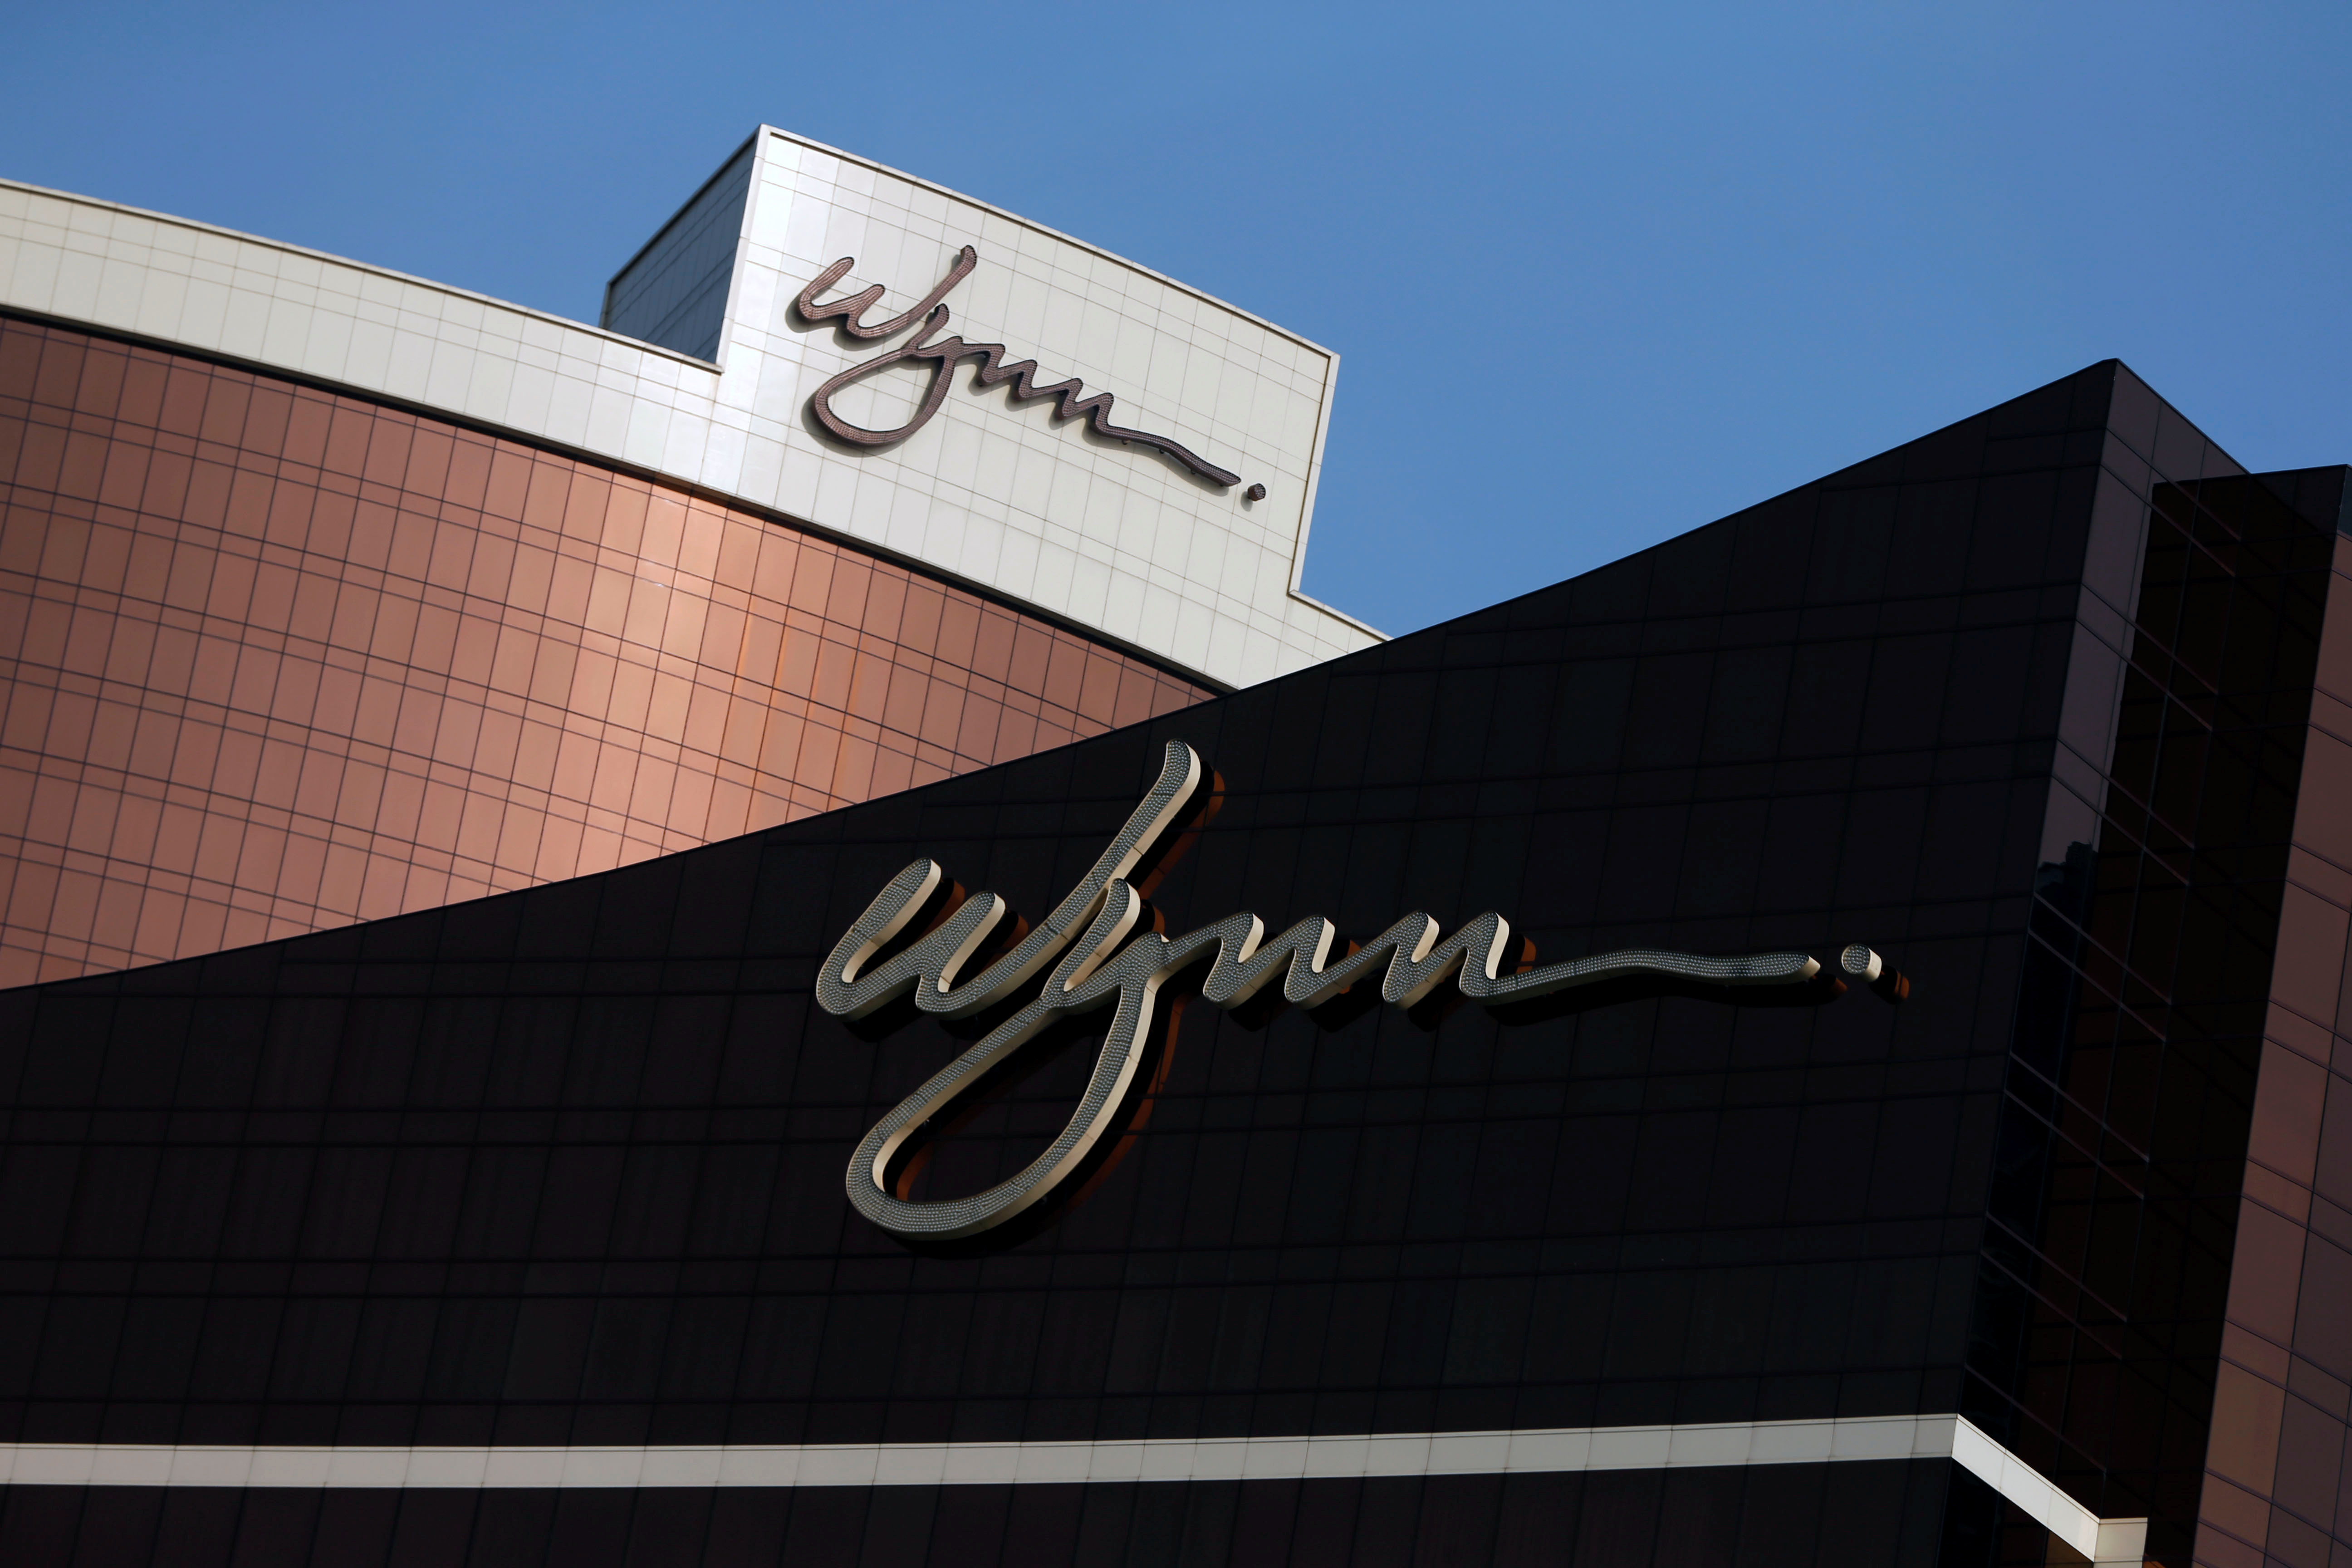 Company logos are displayed at Wynn Macau resort in Macau, China February 8, 2018. REUTERS/Bobby Yip